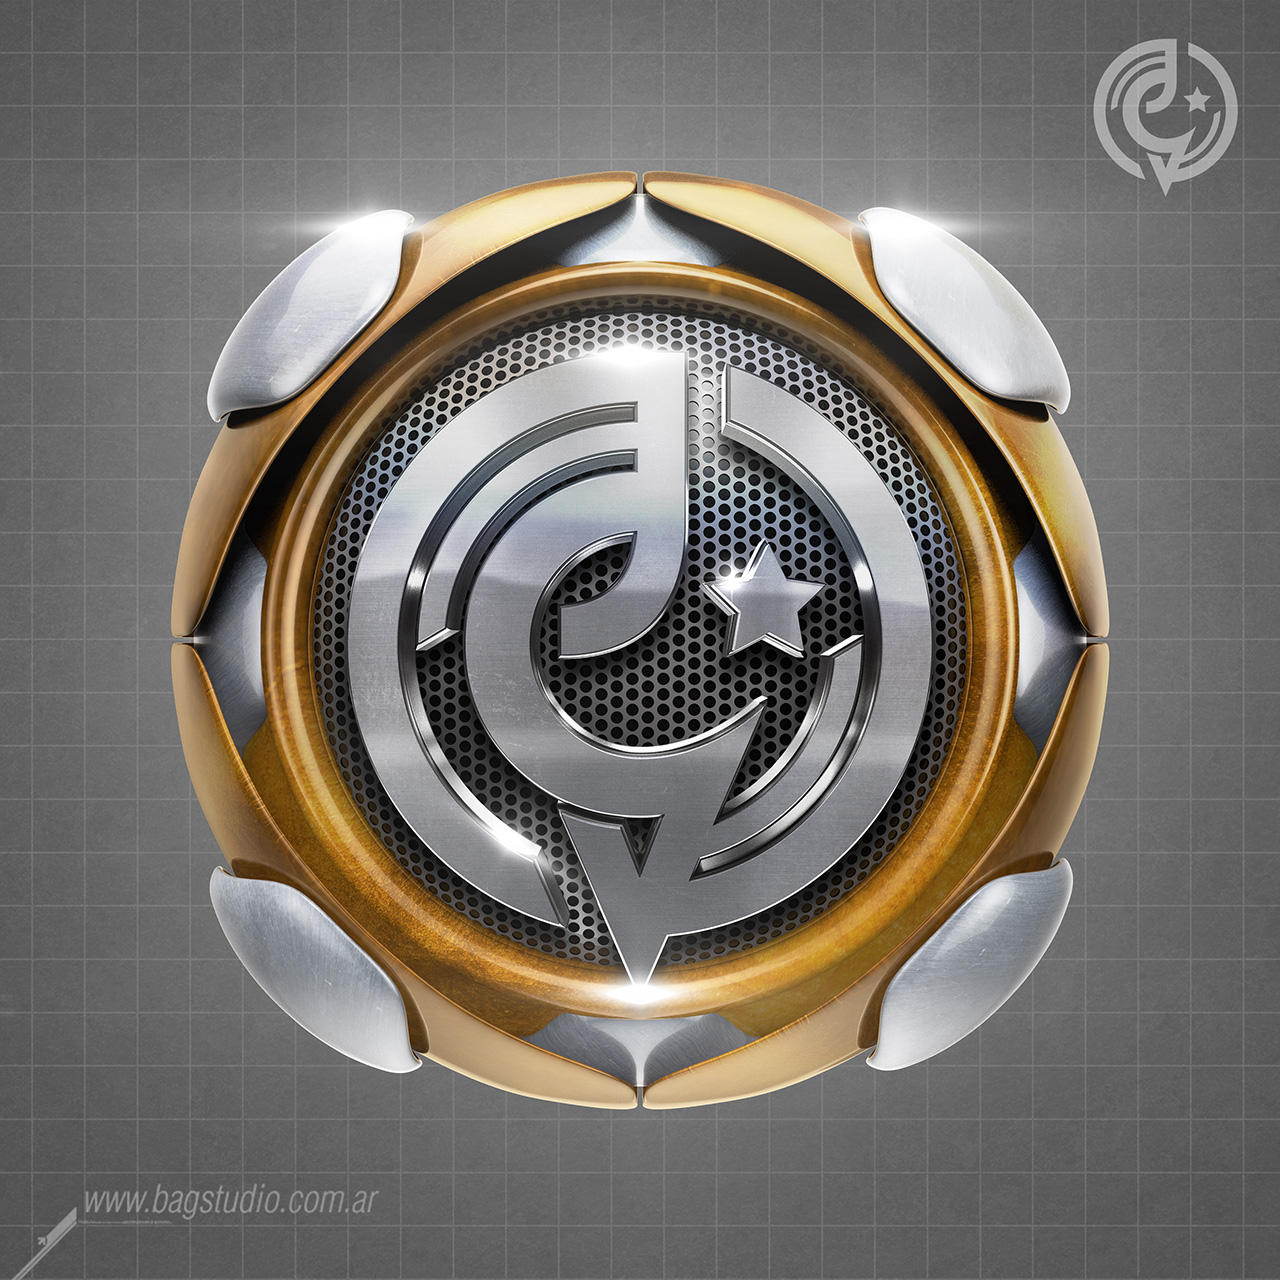 3D Logo Design by Gabey005 on Envato Studio.